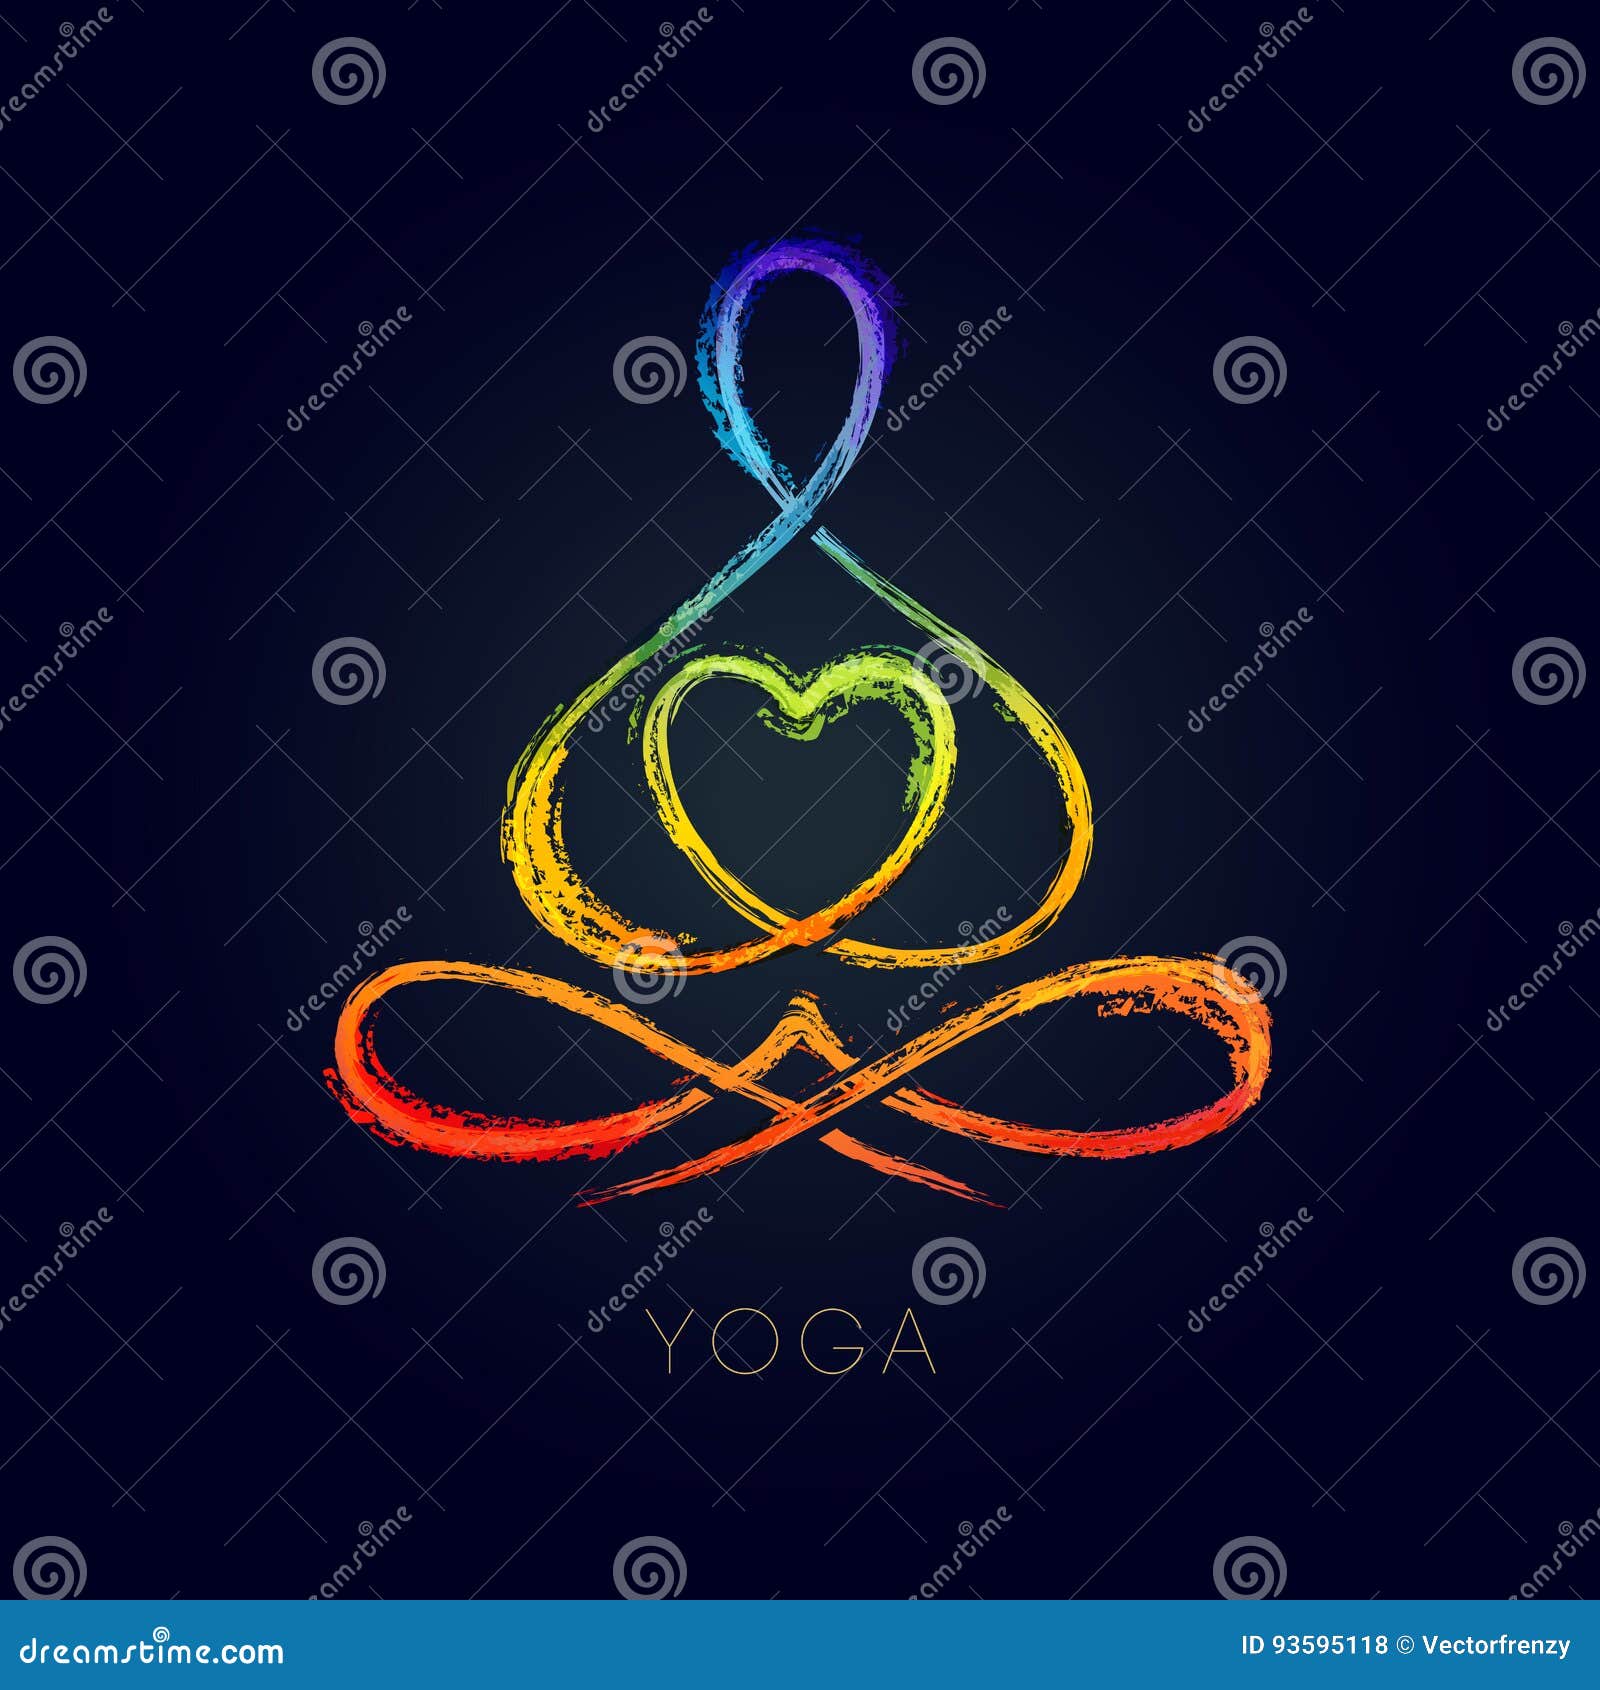 yoga line figure in a lotus pose